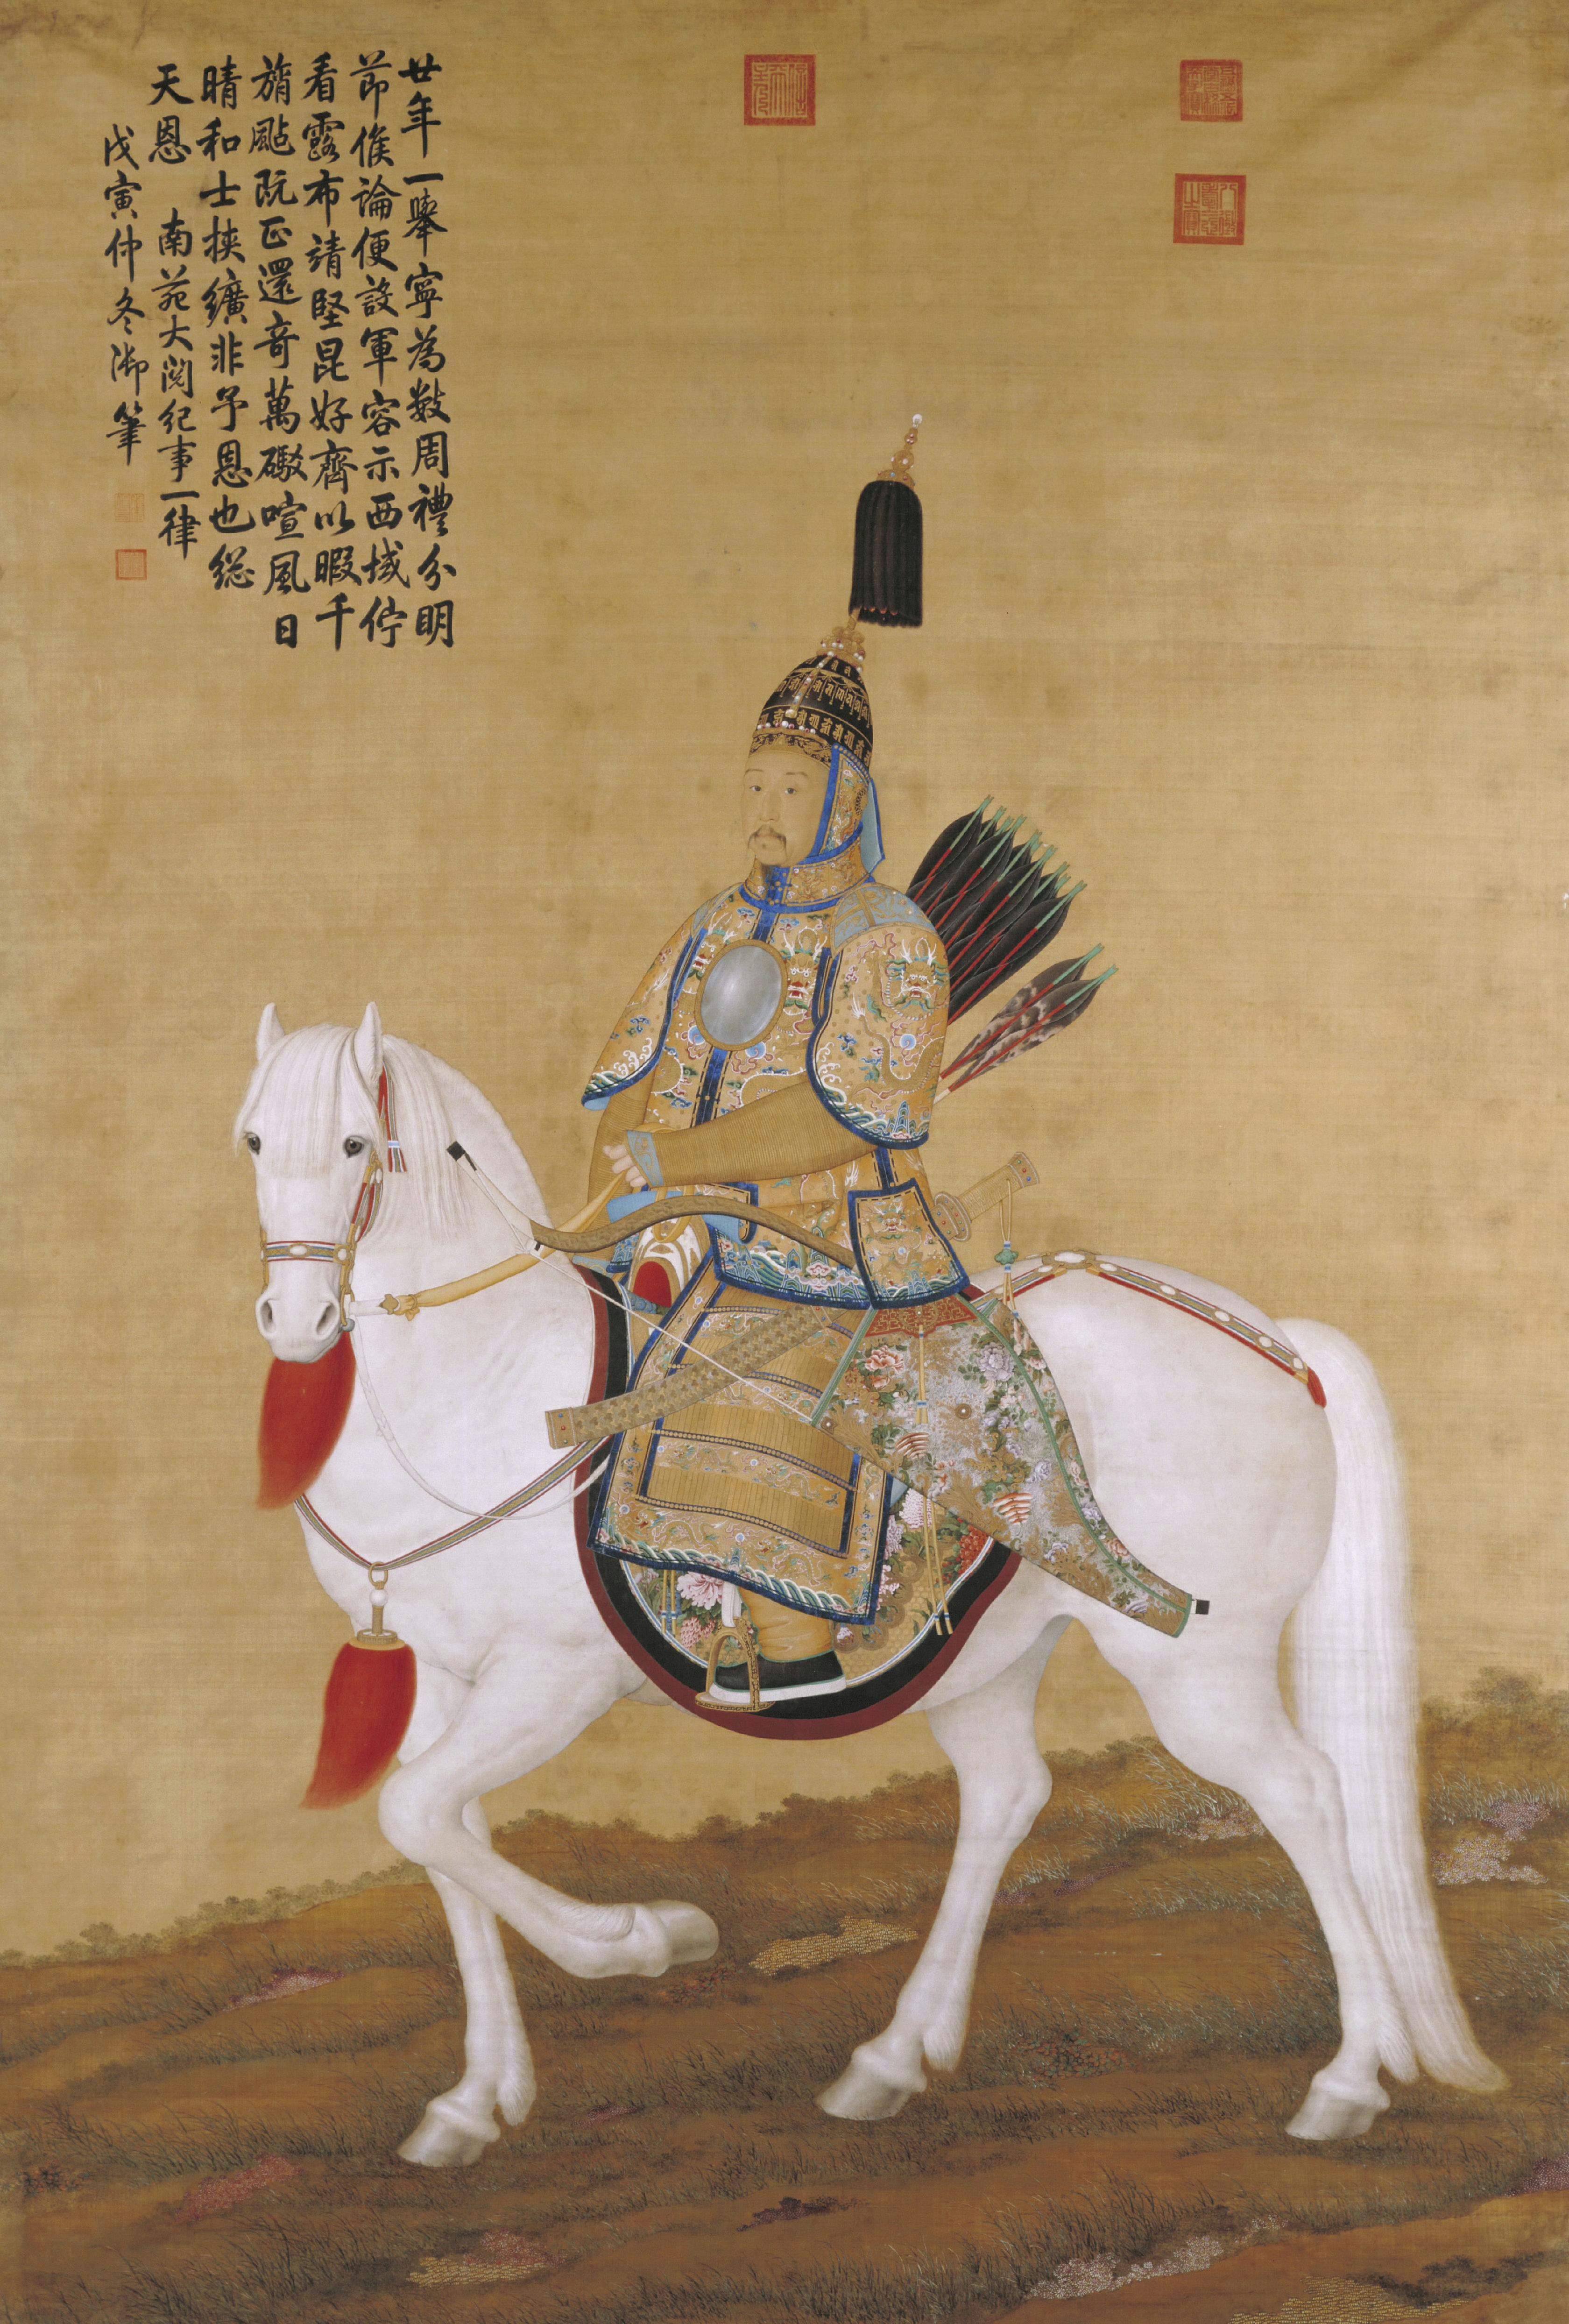 File:郎世宁乾隆皇帝大阅图轴.jpg - Wikimedia Commons